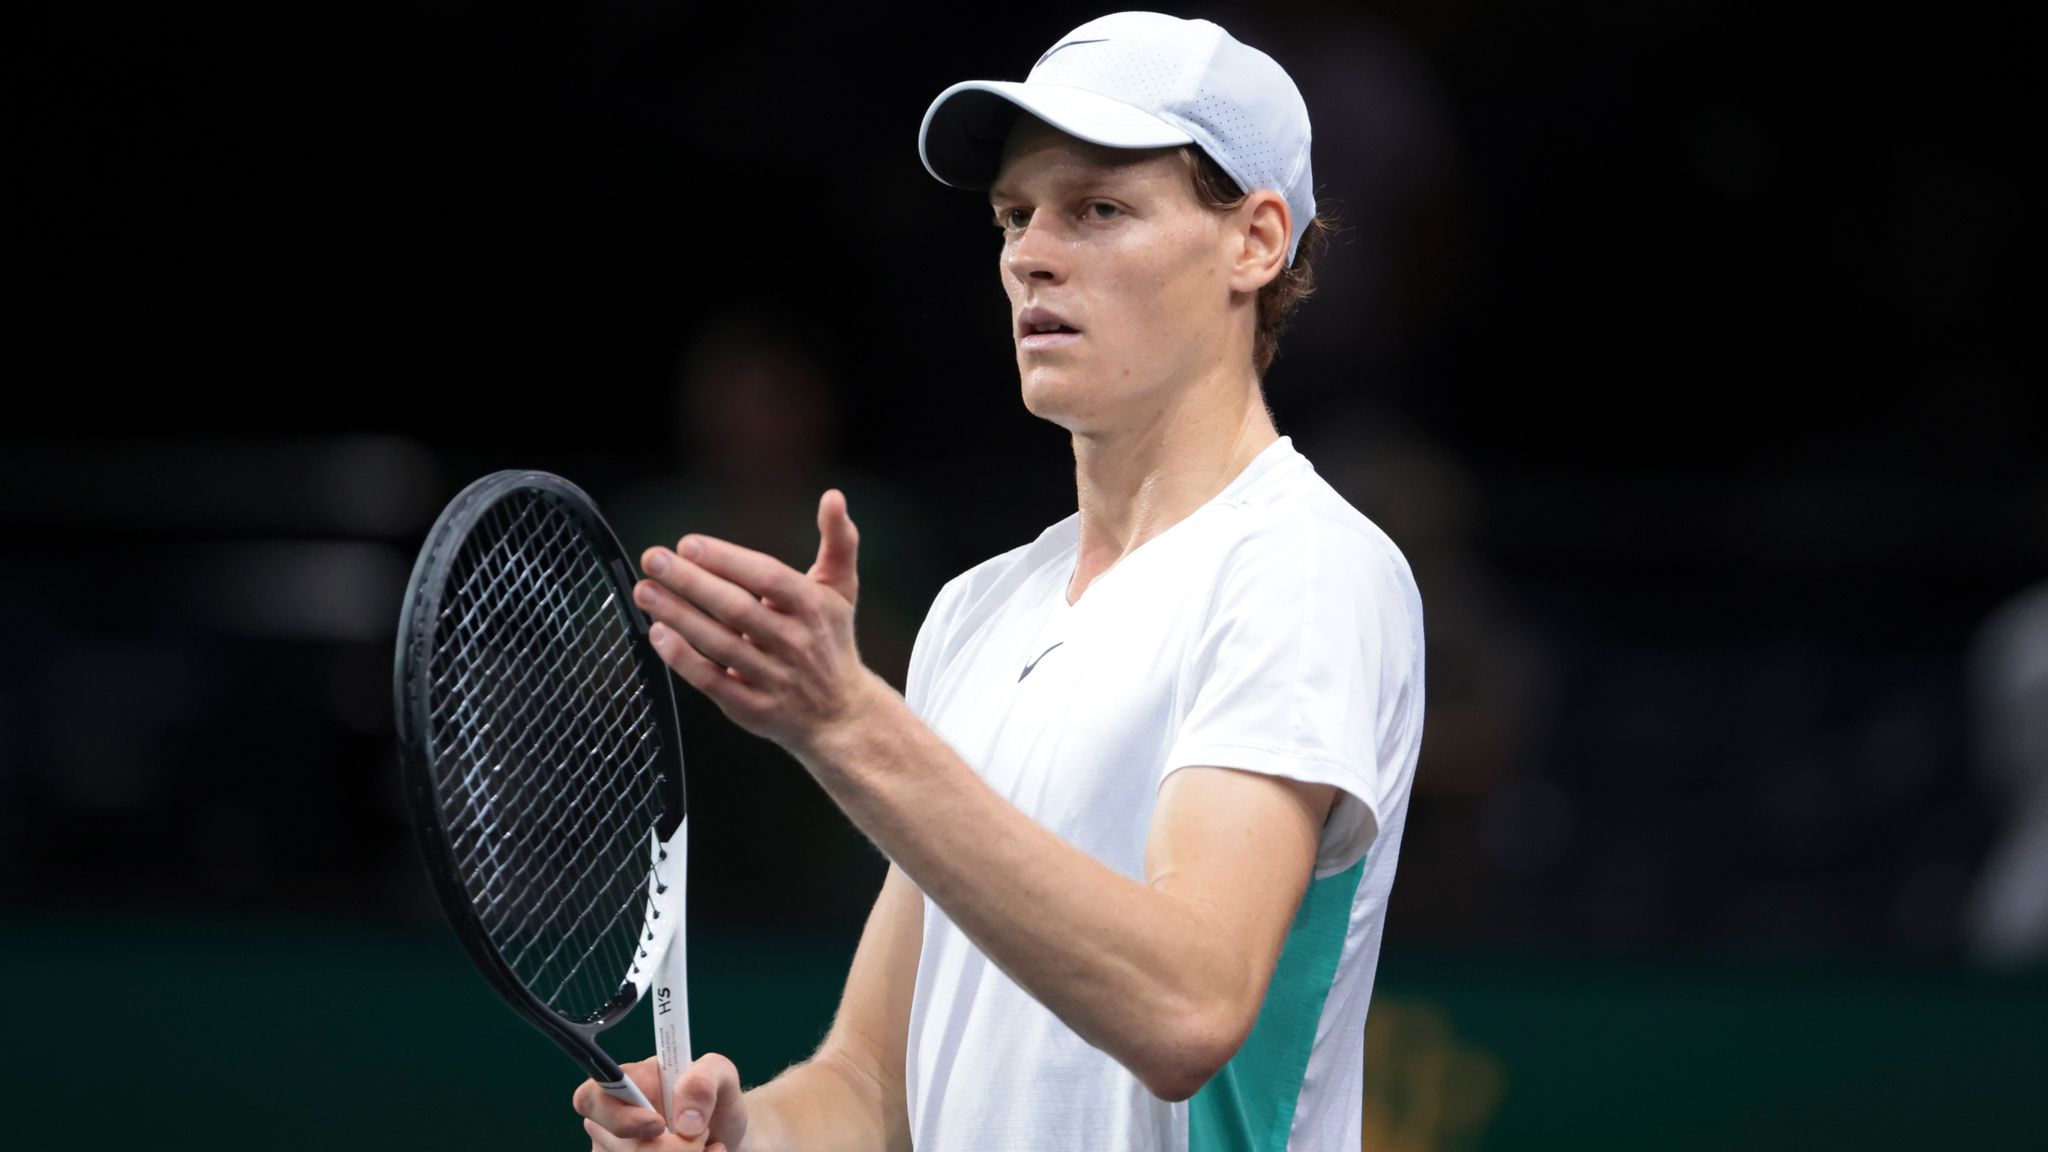 Relevant Tennis on X: JANNIK SINNER IS THE VIENNA OPEN CHAMPION